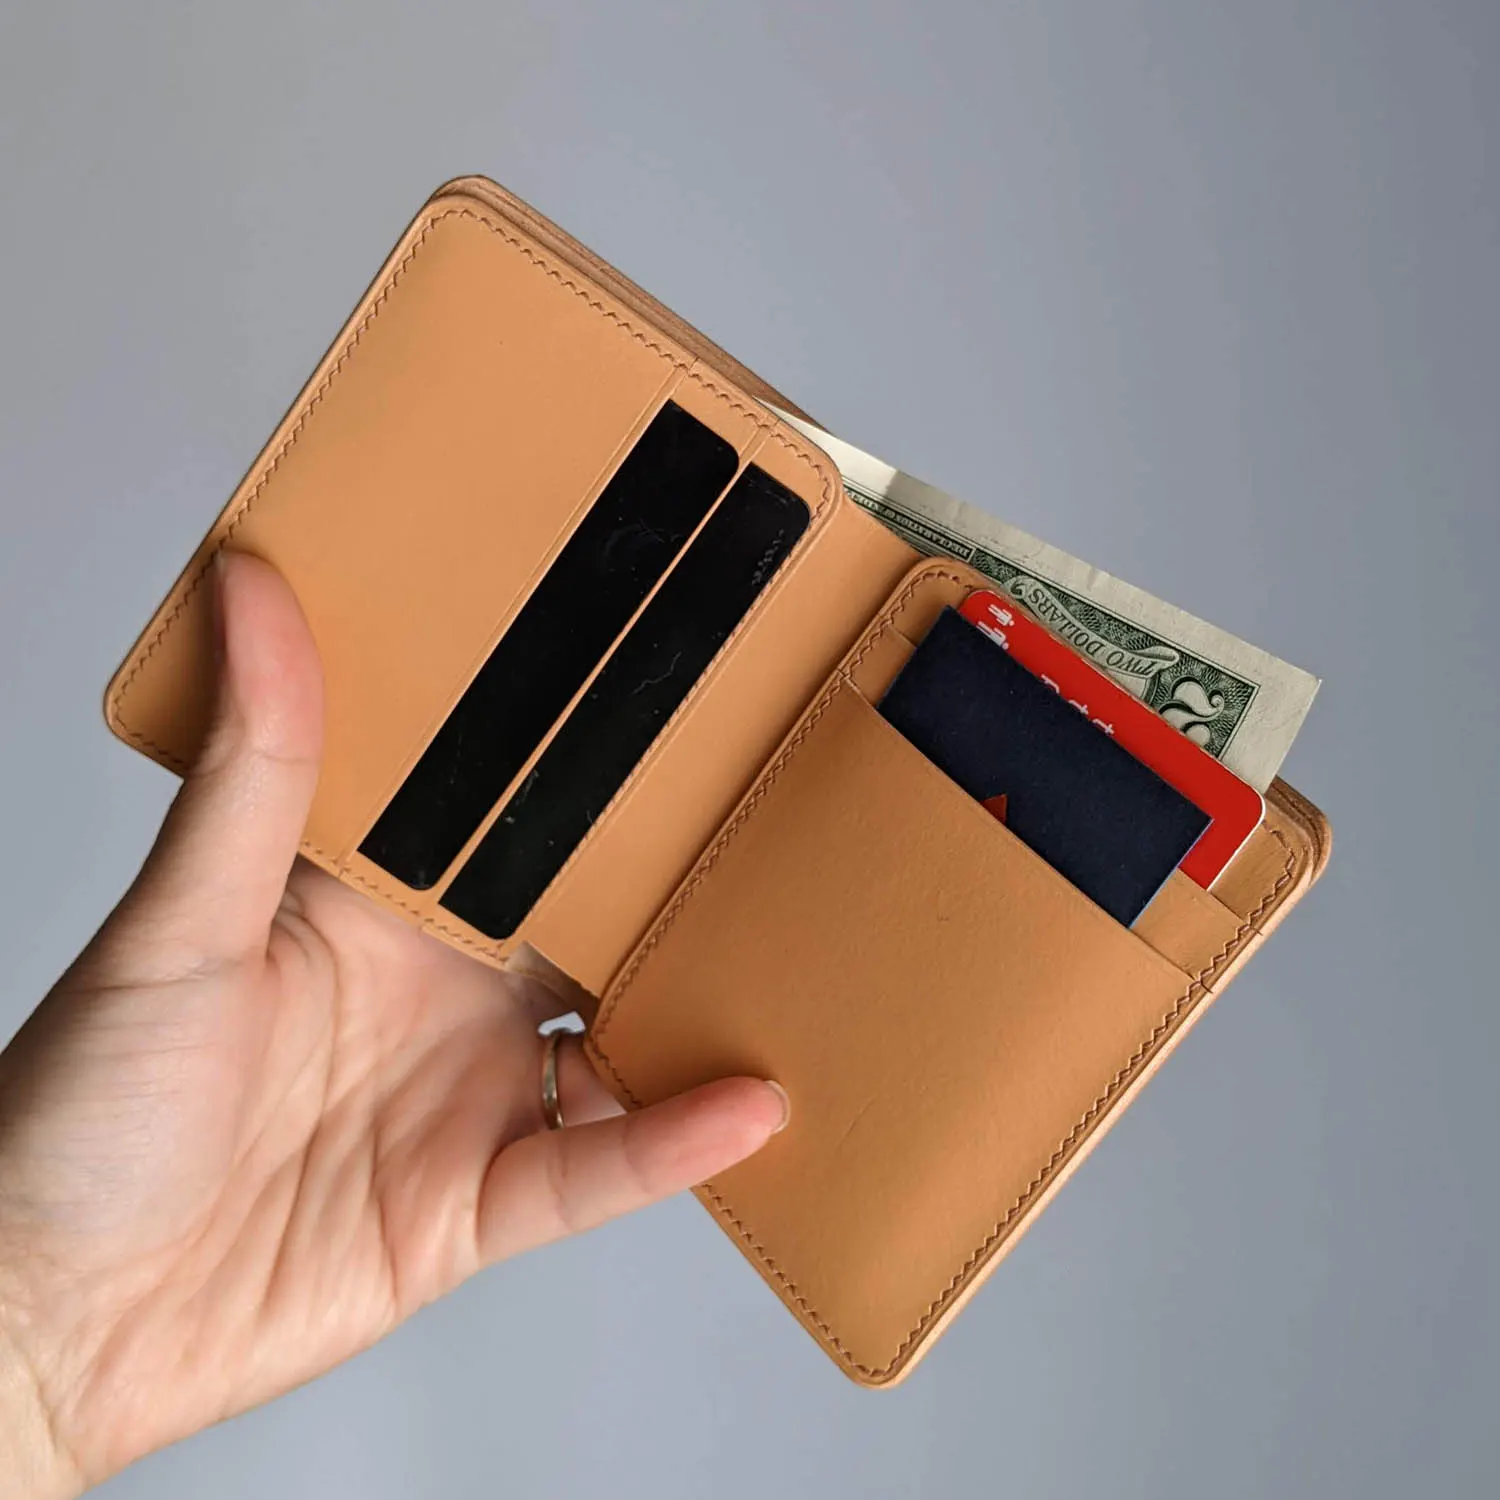 possala designs natural artisan made wallet